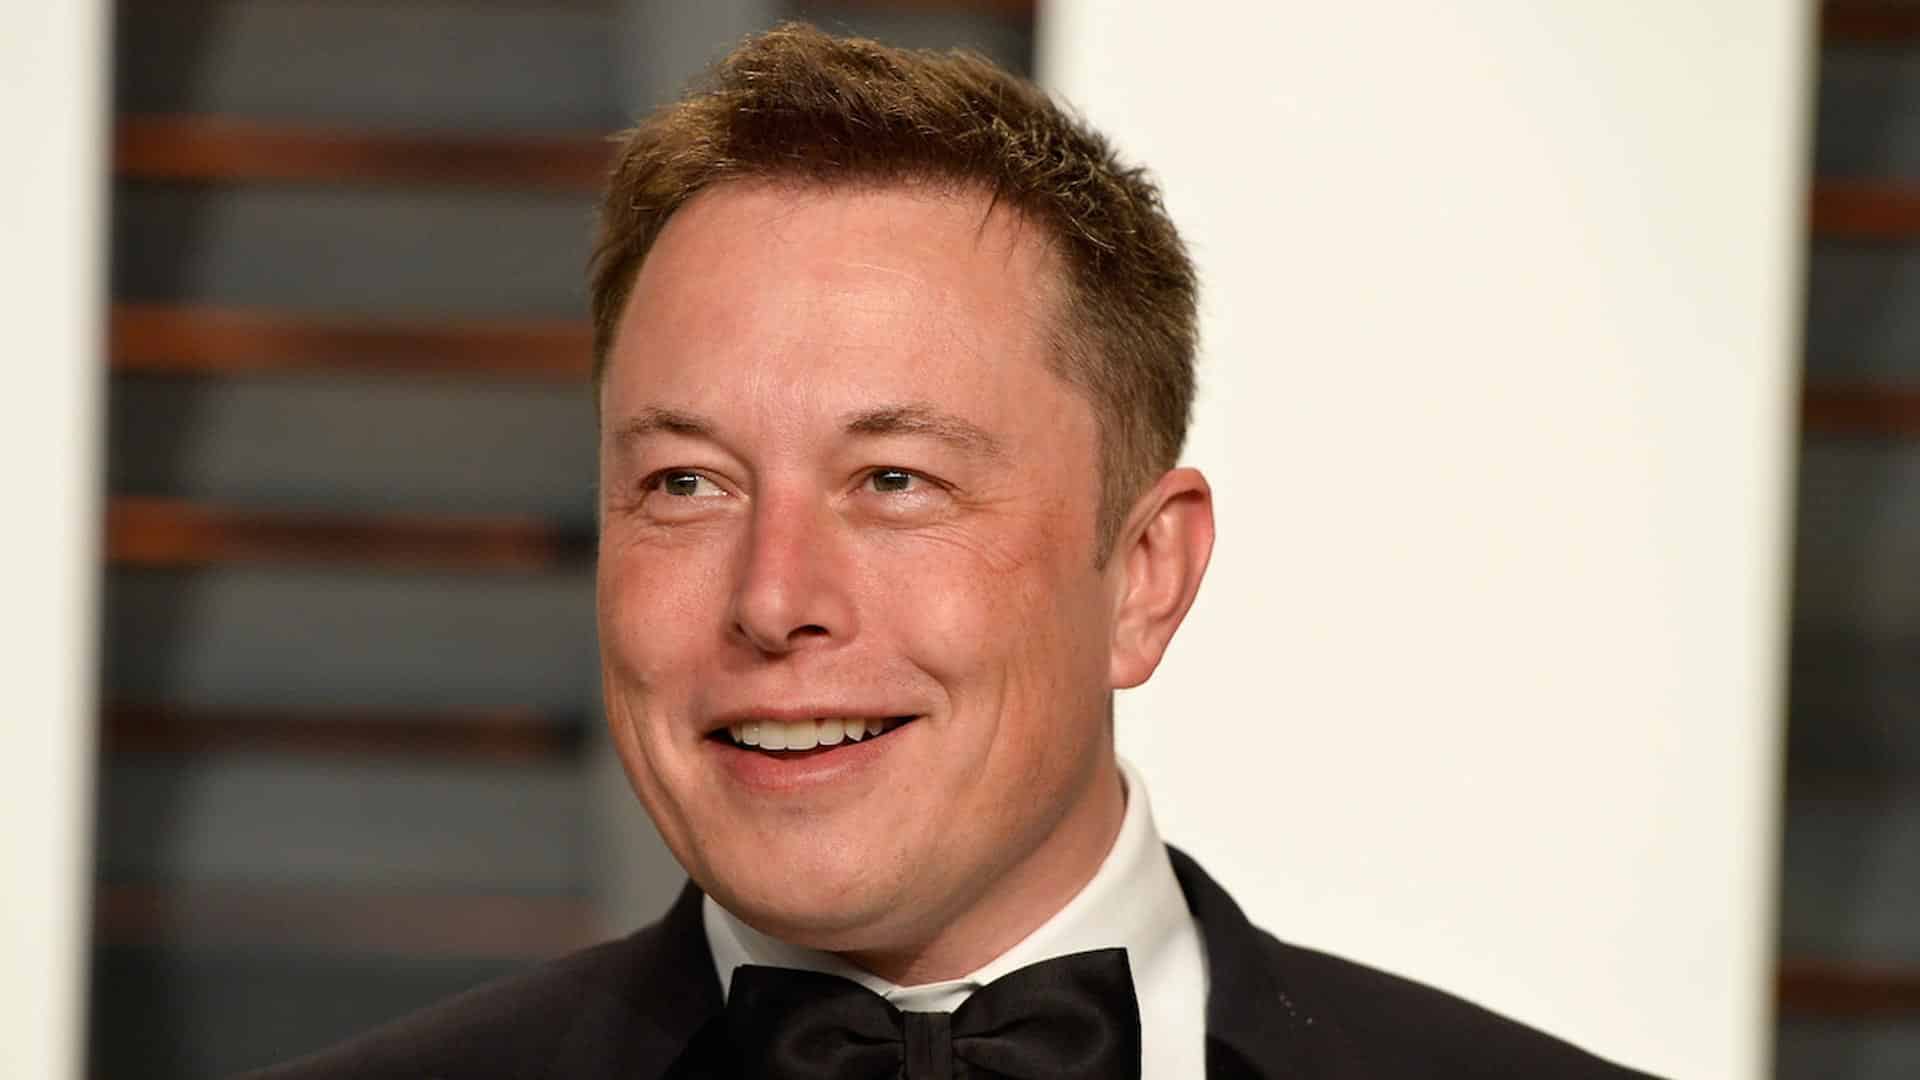 Has Elon Musk Had a Hair Transplant?